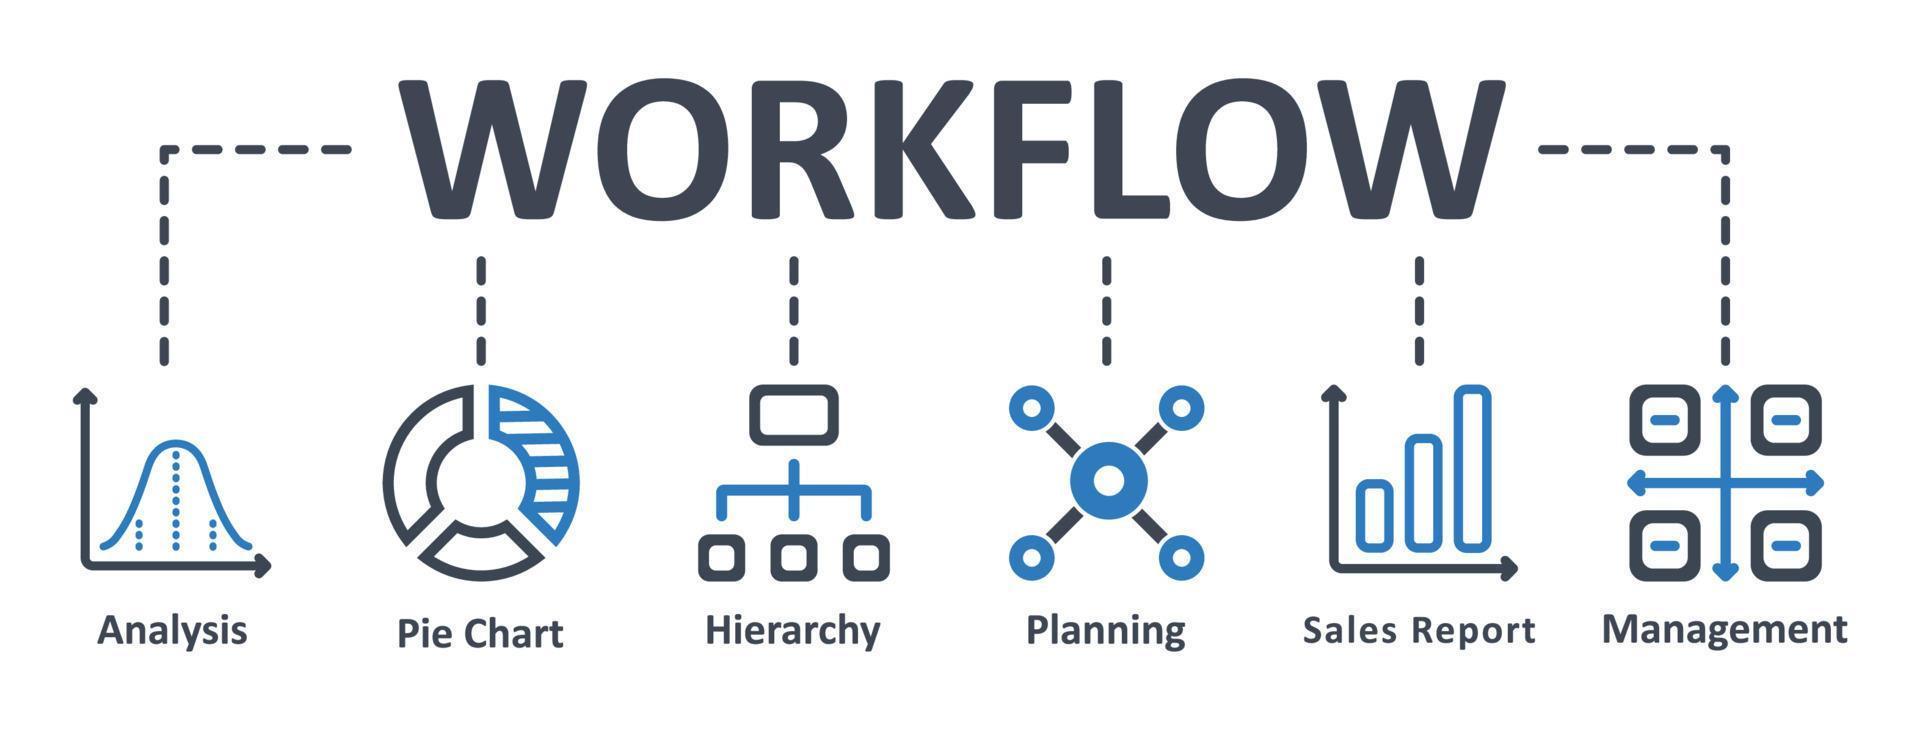 Workflow-Symbol - Vektor-Illustration. Workflow, Hierarchie, Diagramm, Diagramm, Grafik, Infografik, Vorlage, Präsentation, Konzept, Banner, Piktogramm, Icon-Set, Icons . vektor